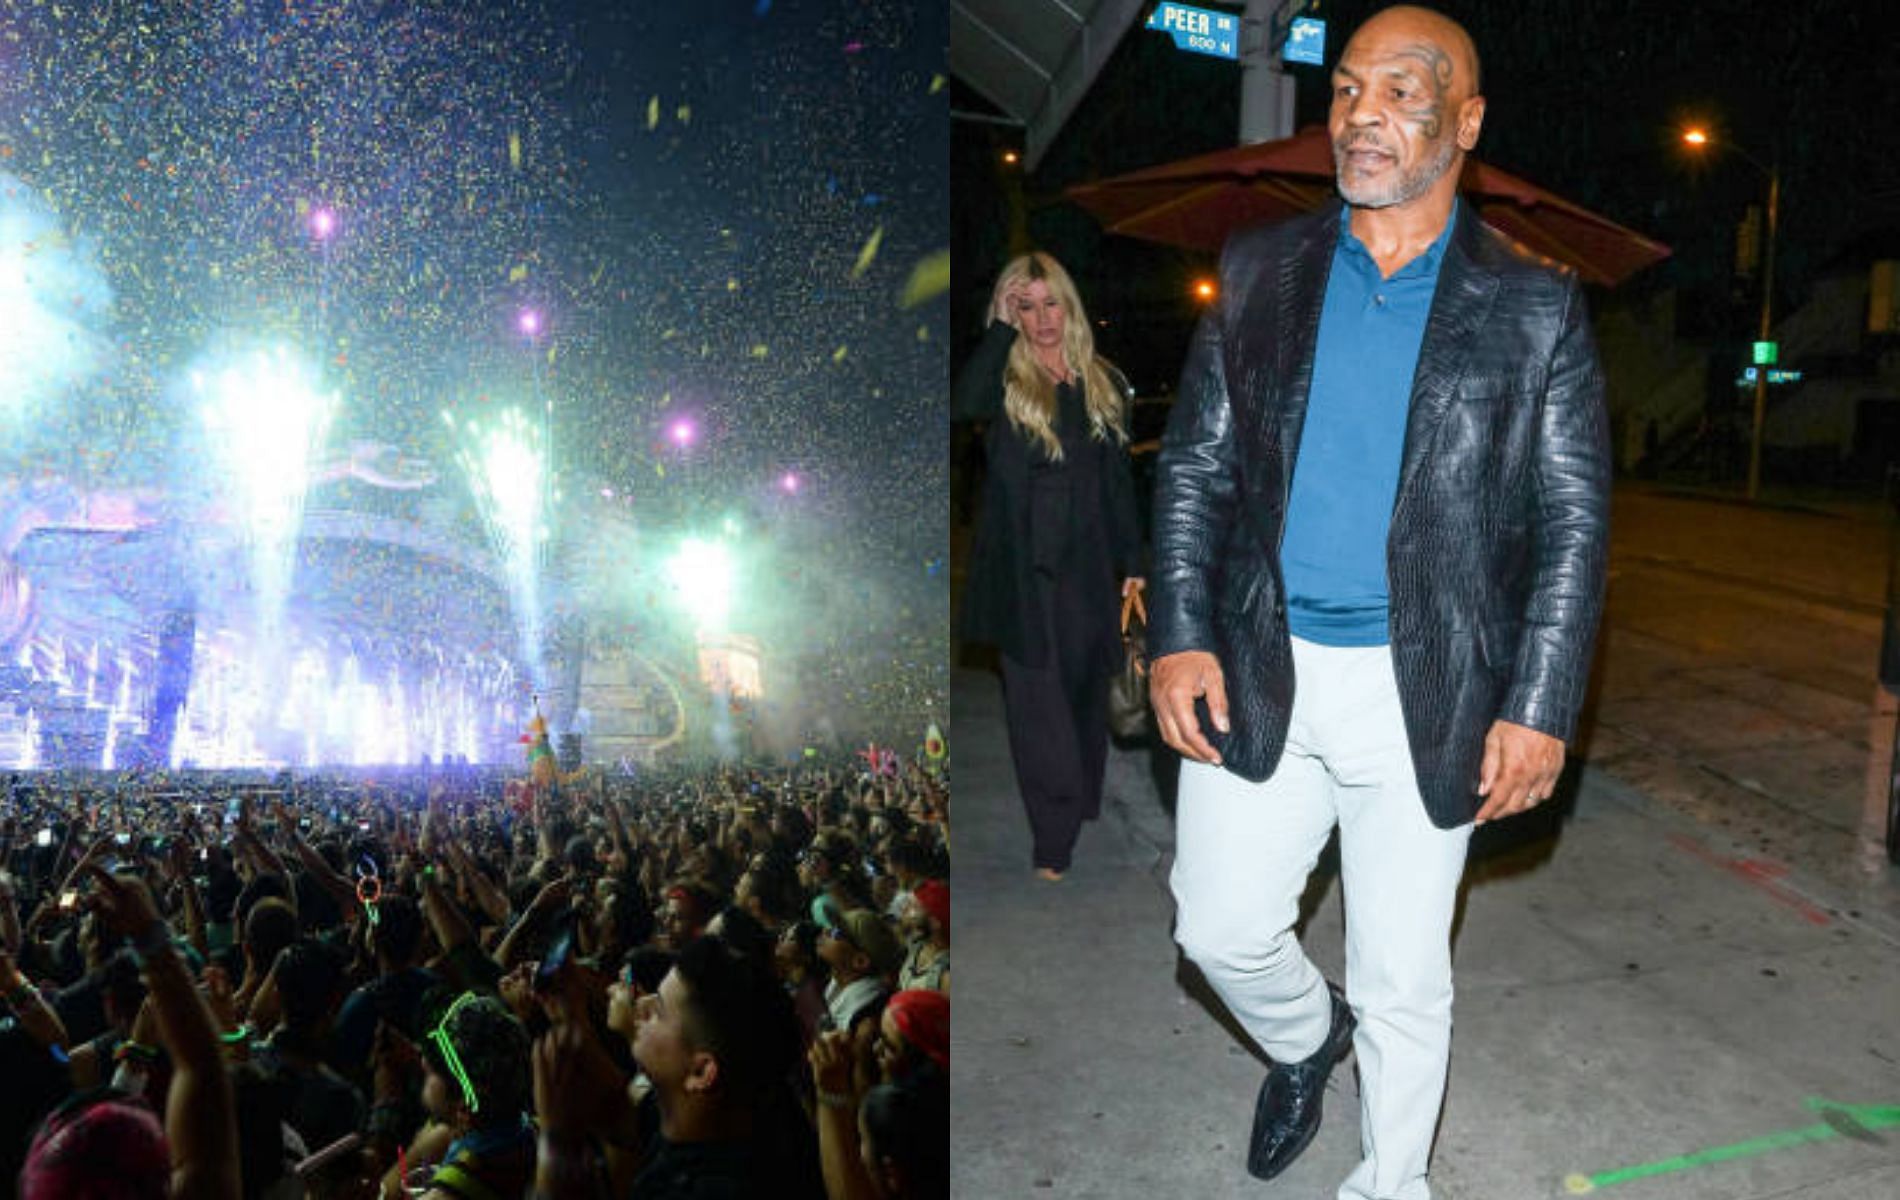 Mike Tyson attended EDC music festival in Las Vegas last night.